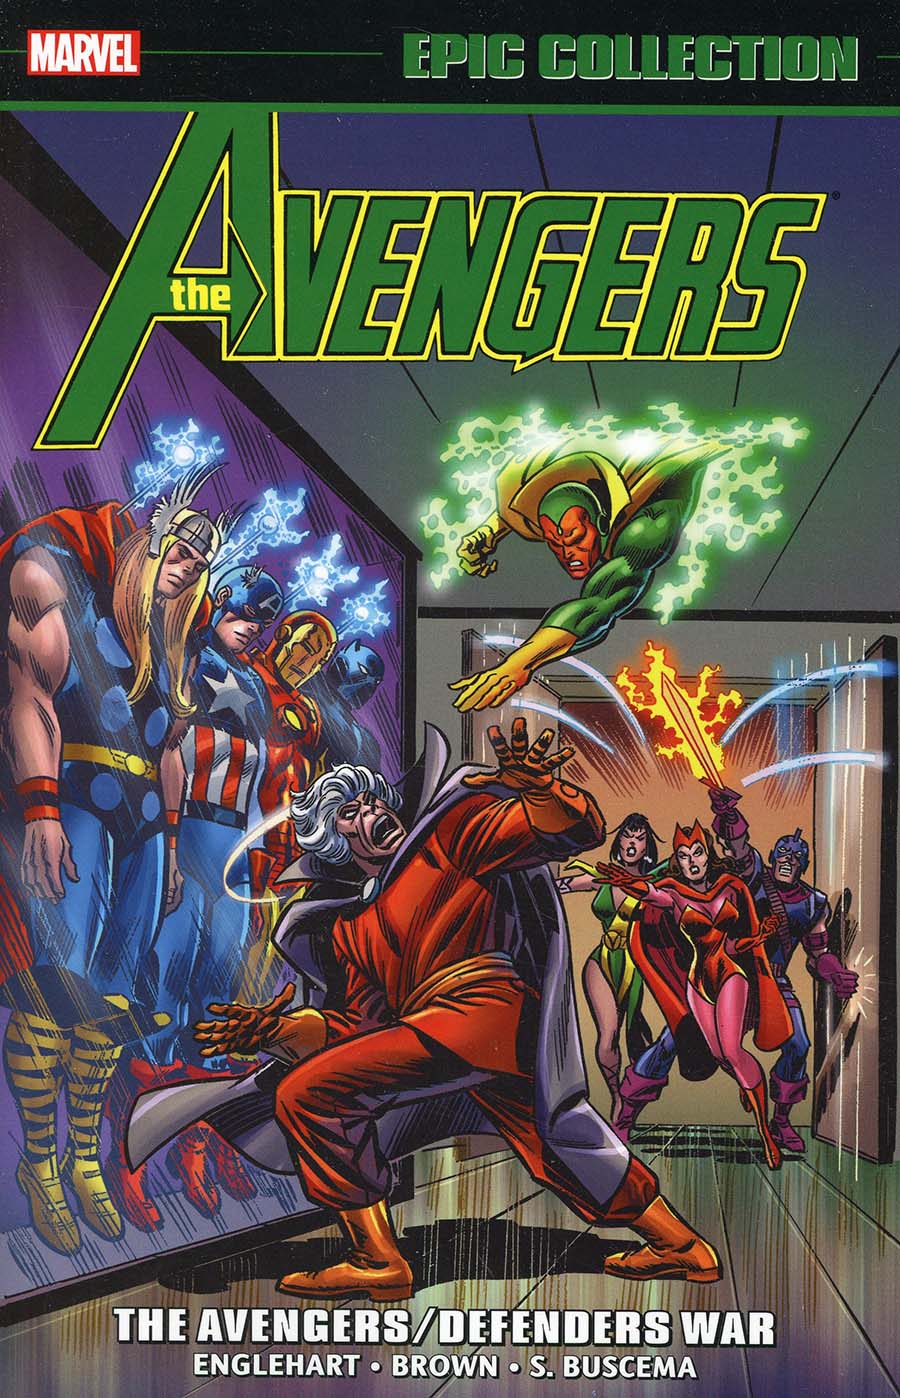 Avengers Epic Collection Vol 7 Avengers Defenders War TP